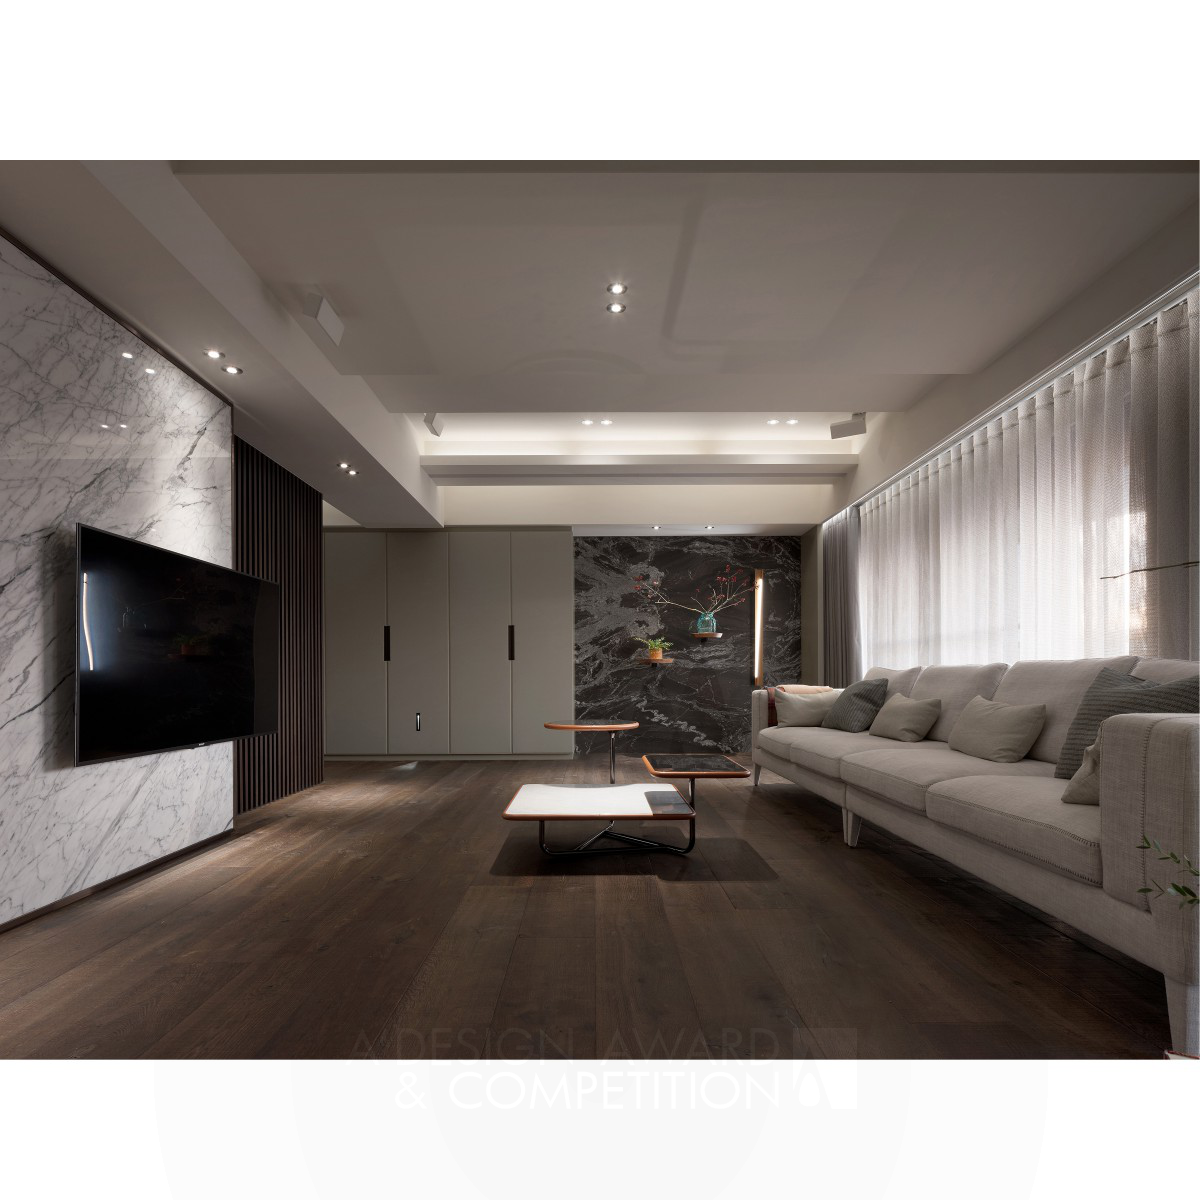 Kuan Heng Liu Residential Interior Design